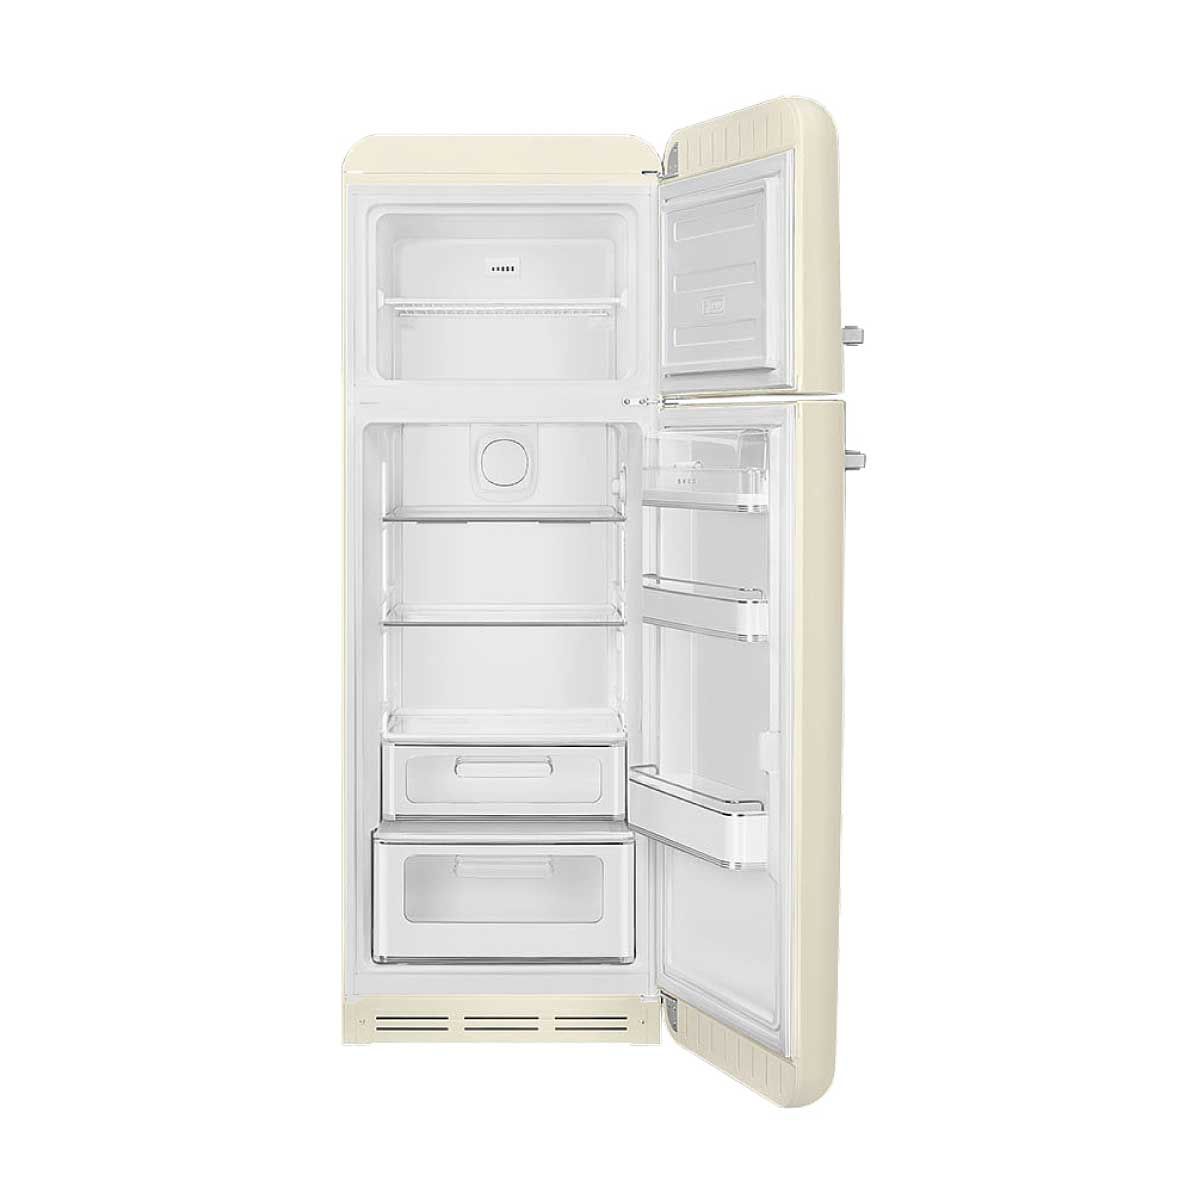 SMEG ตู้เย็น 2 ประตู 10.38 Q.สไตล์ 50  Retro รุ่นFAB30RCR5 สีครีม